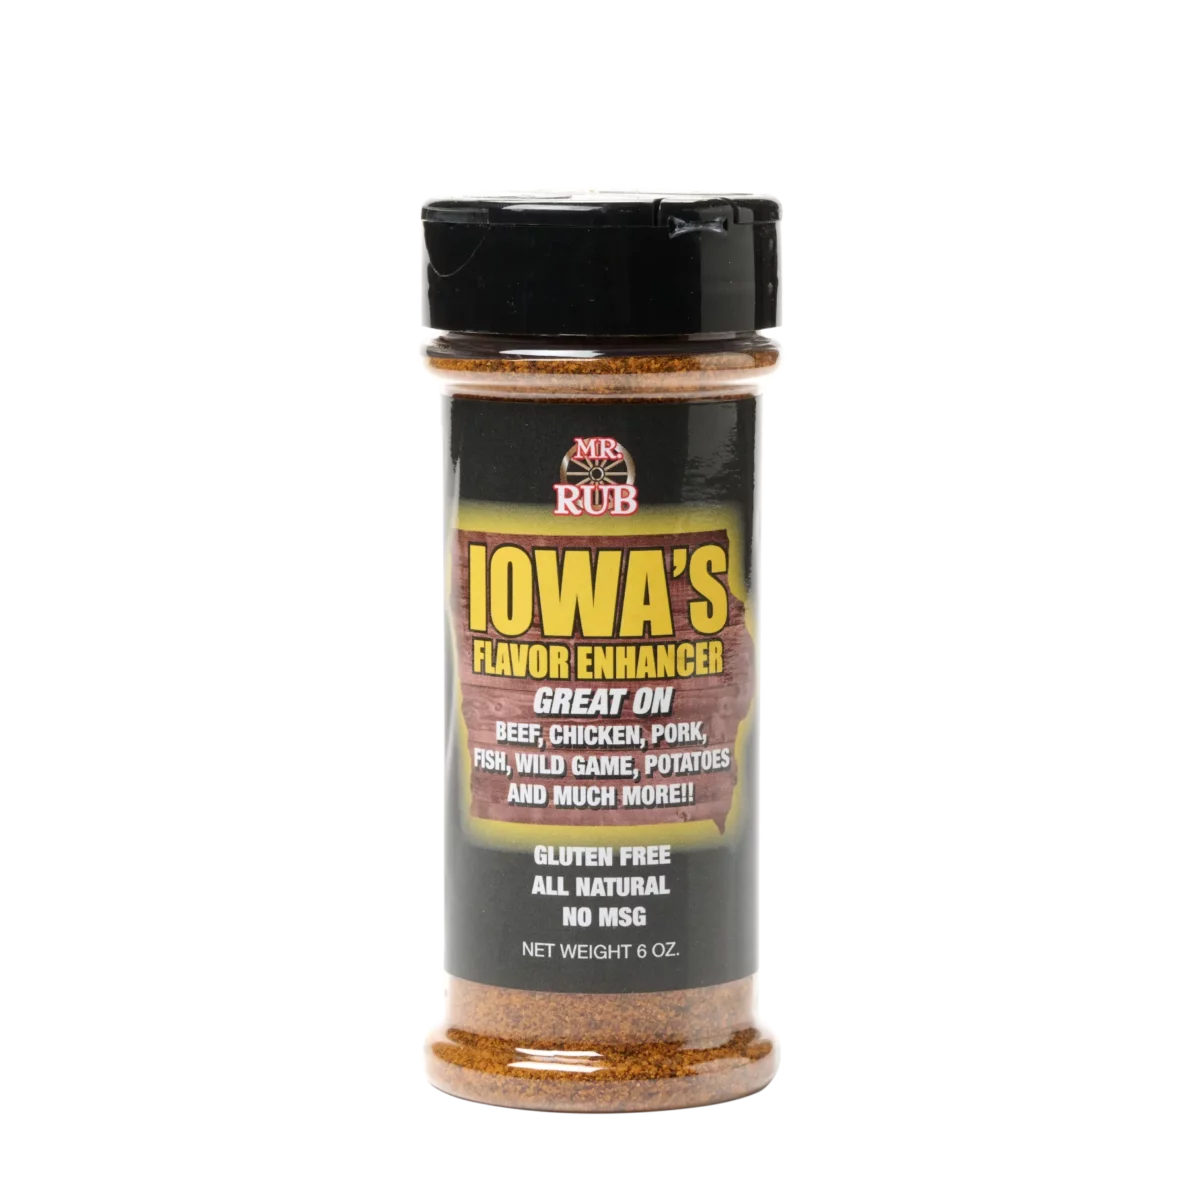 MR RUB Iowa's Flavor Enhancer - 6oz -